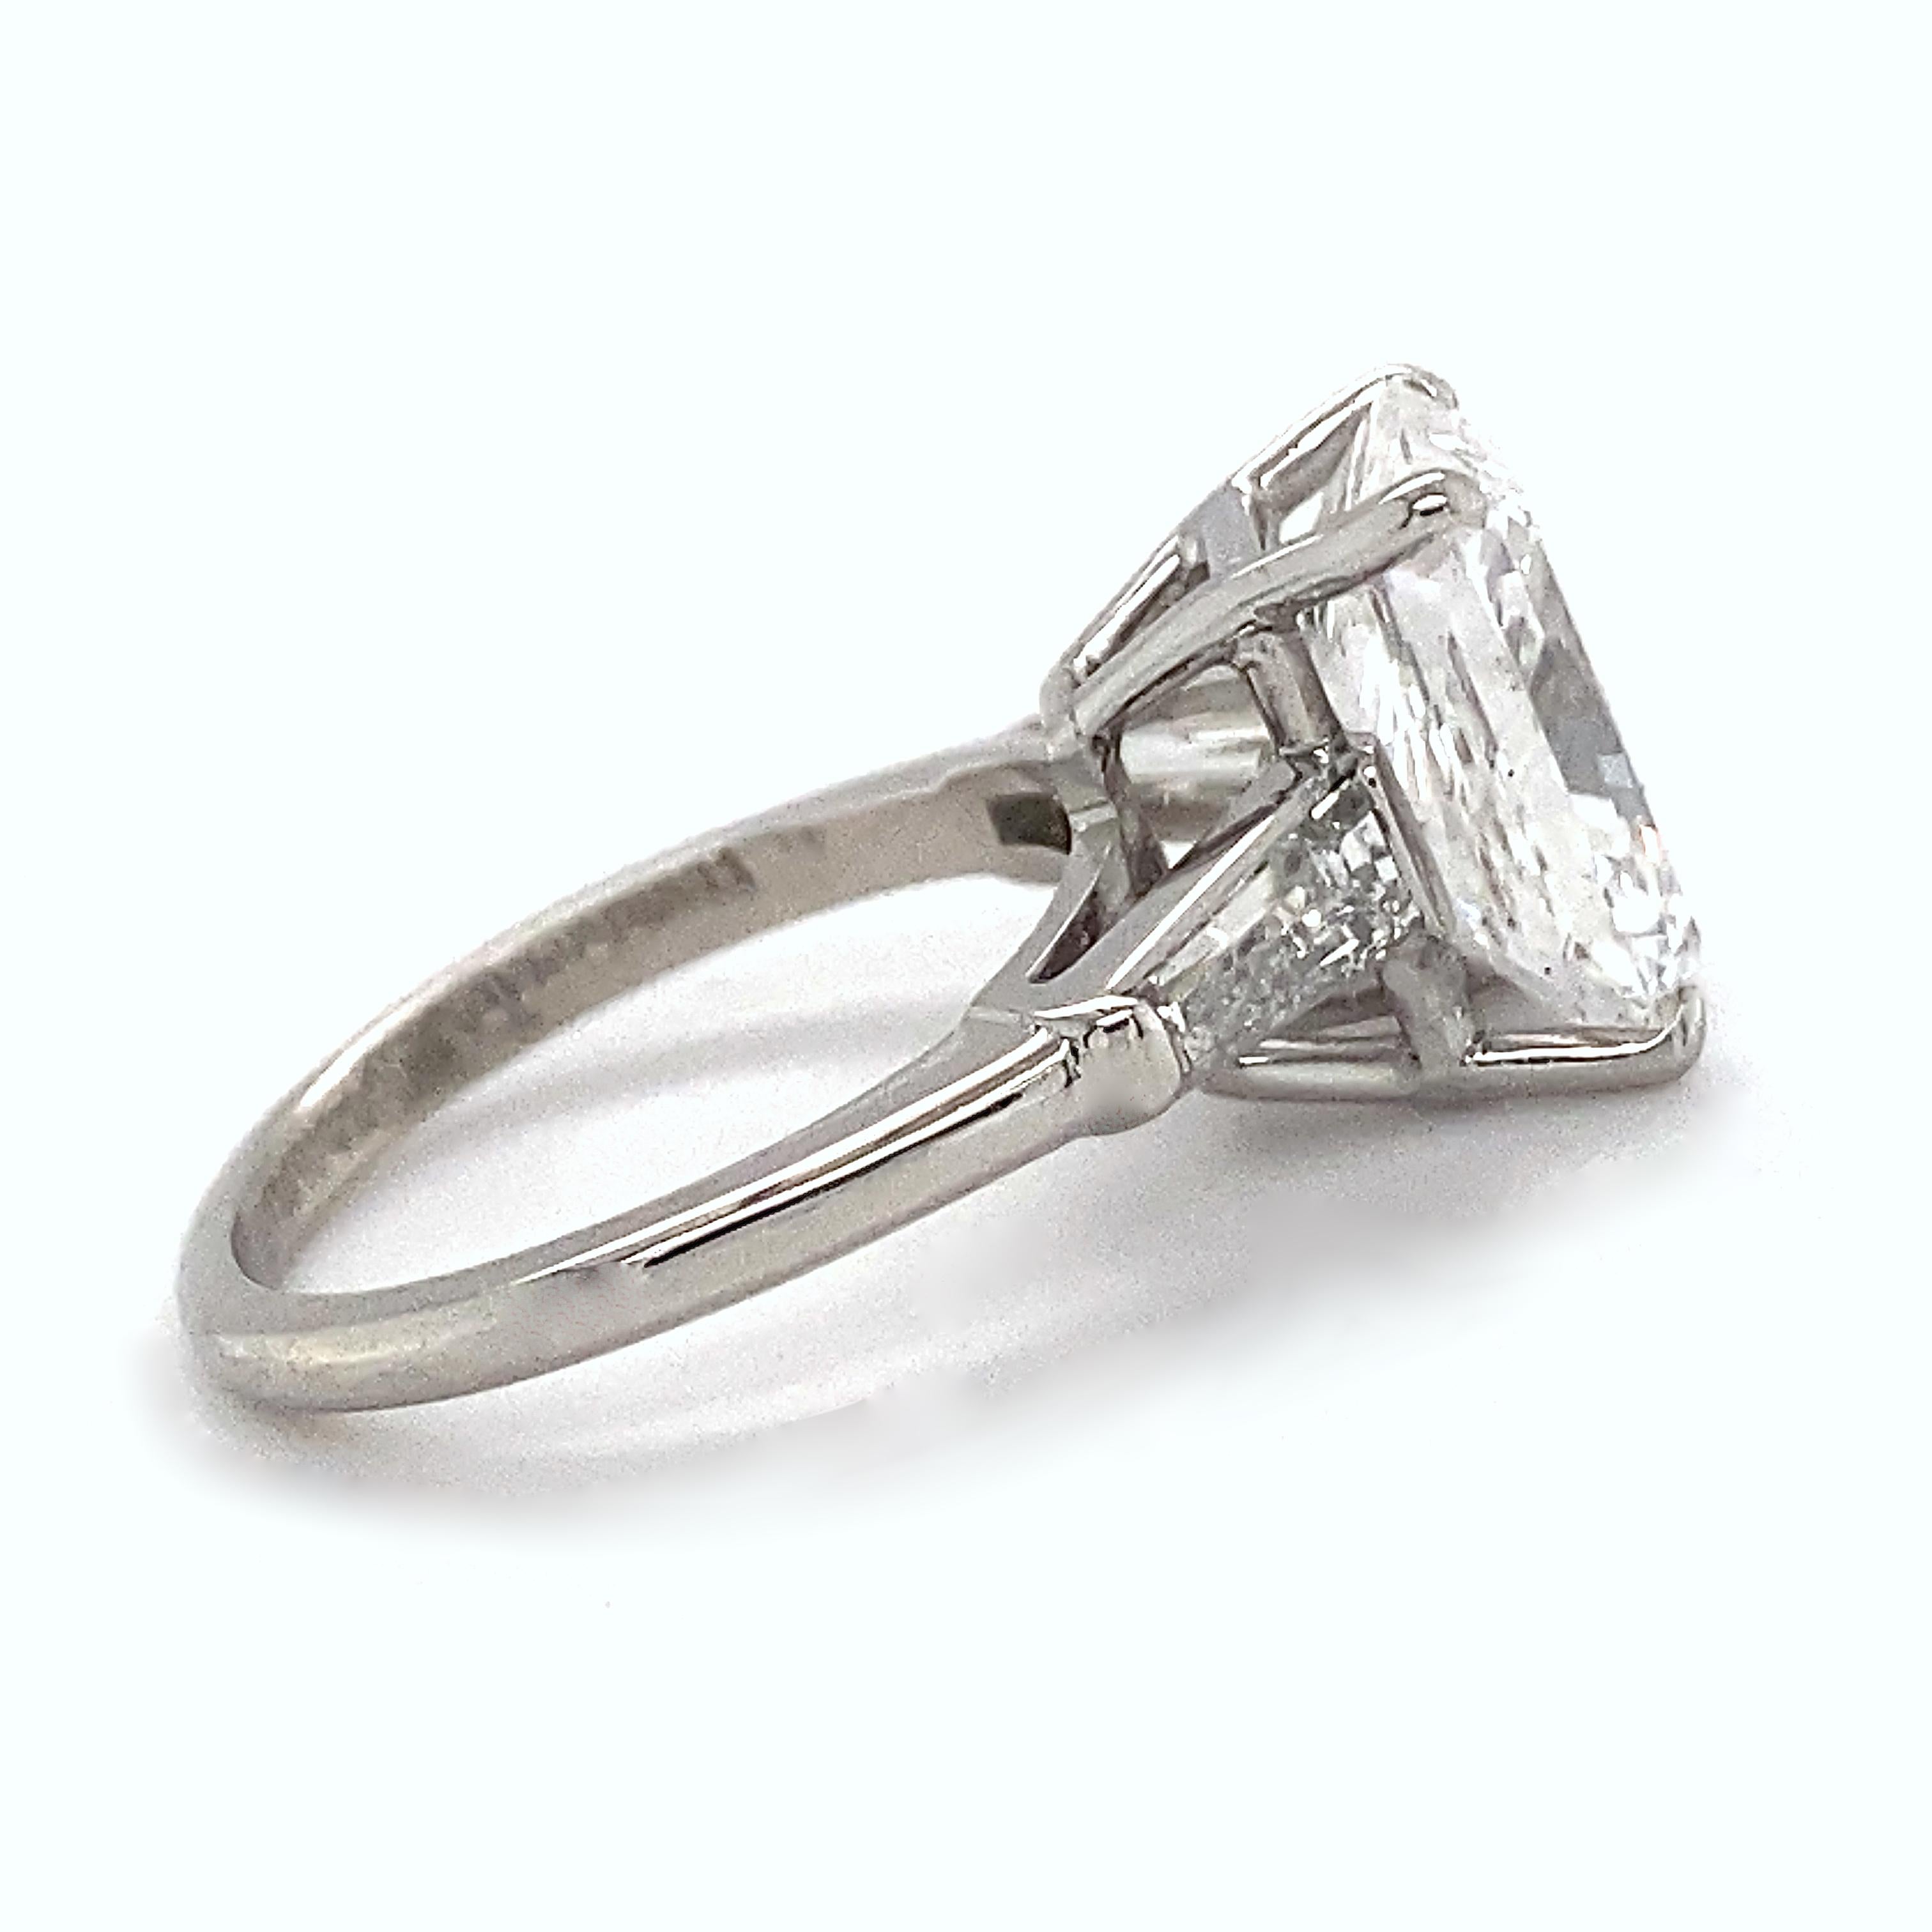 4.06 Carat E-VVS1 GIA Certified Radiant Cut Diamond in Deco-Era Platinum Ring 8